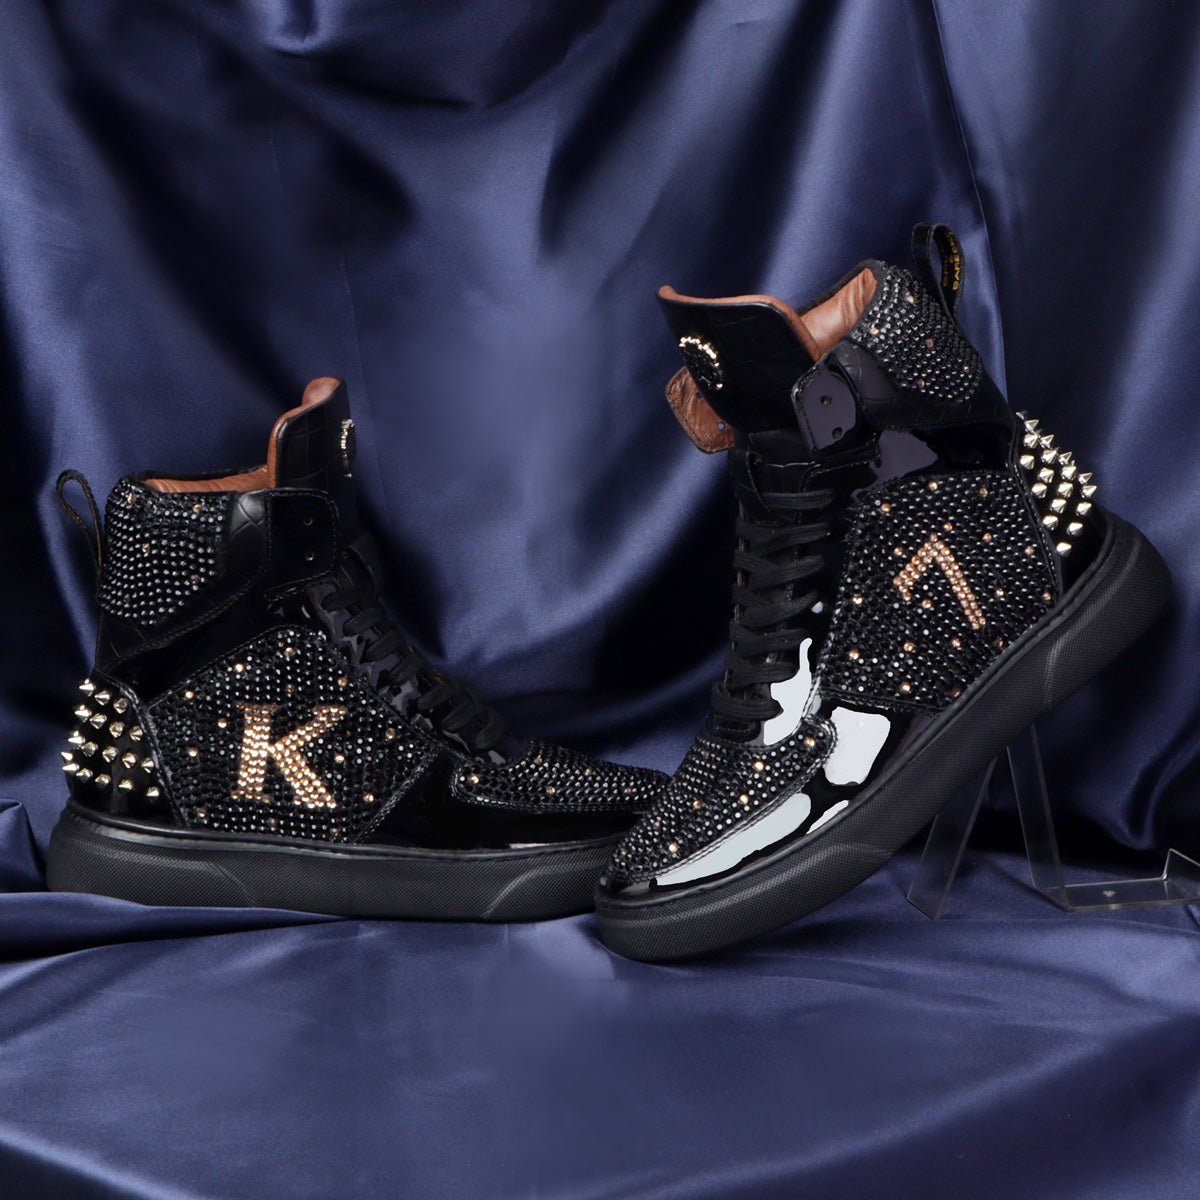 Customized "K7" Initial Black and Golden Swarovski Crystal Zardosi Patent Leather Sneakers with Golden Stud by Brune & Bareskin